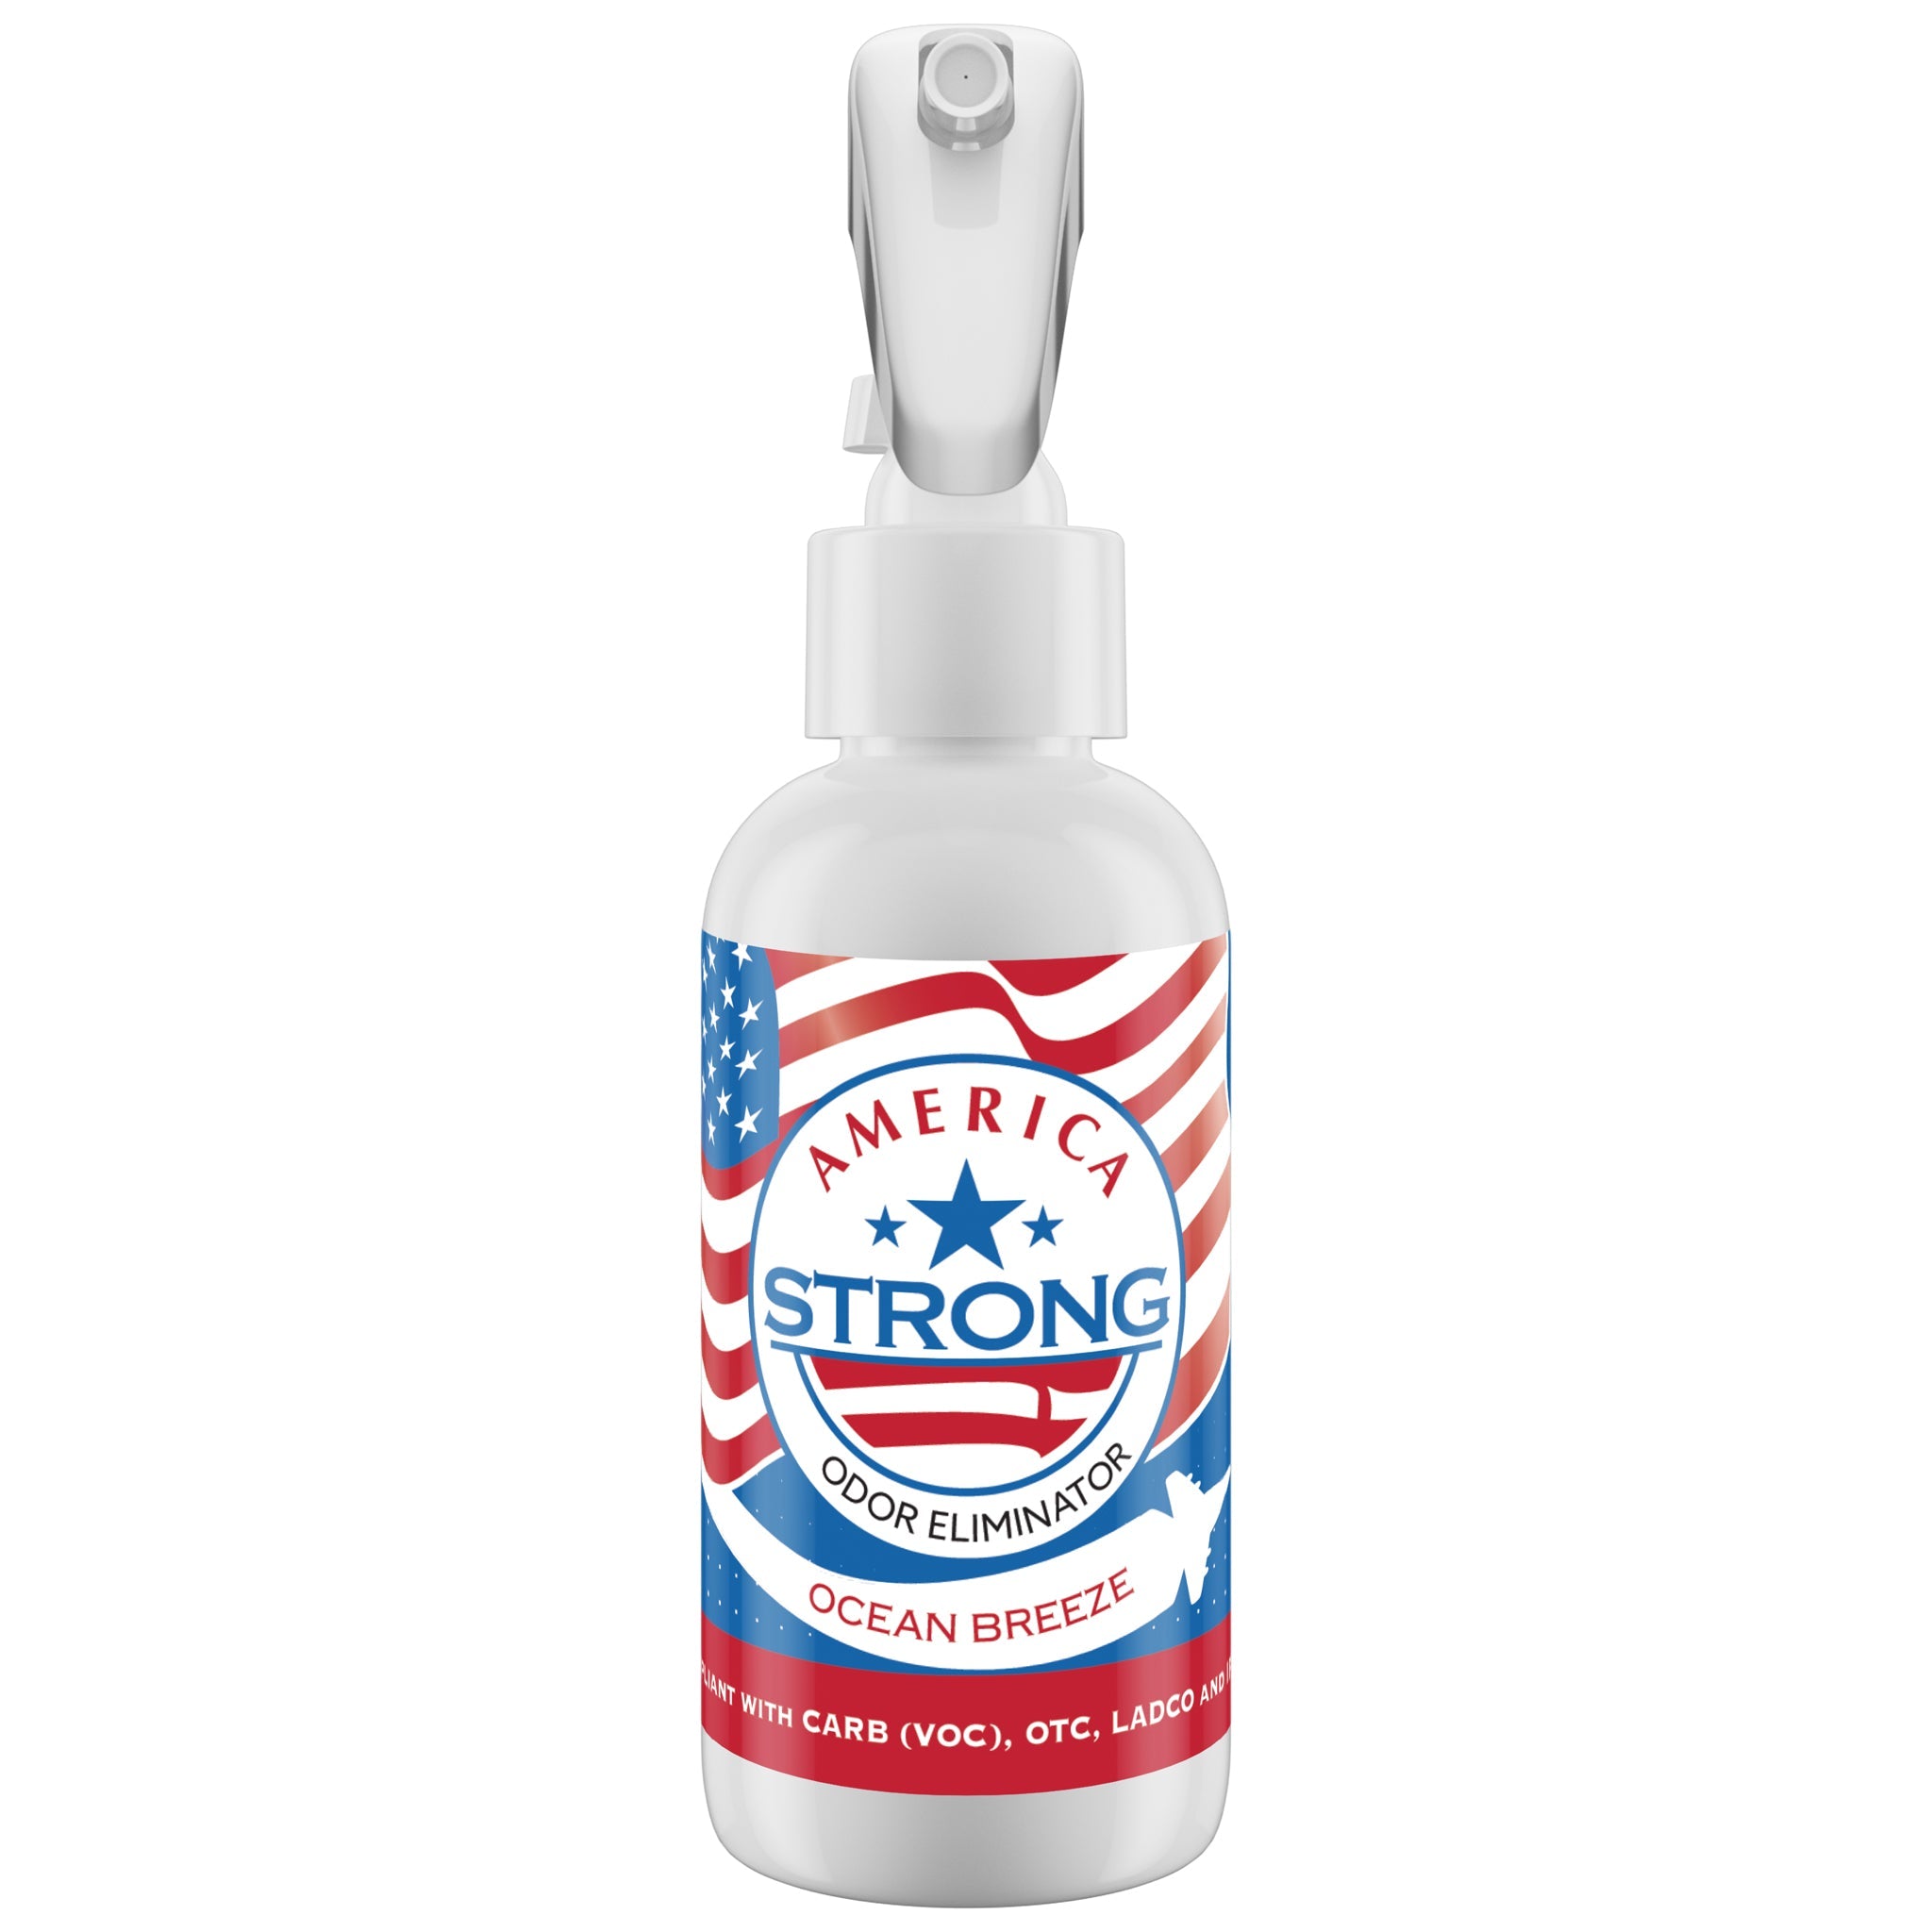 America Strong Odor Eliminator - Ocean Breeze Scent Size: 4.0oz